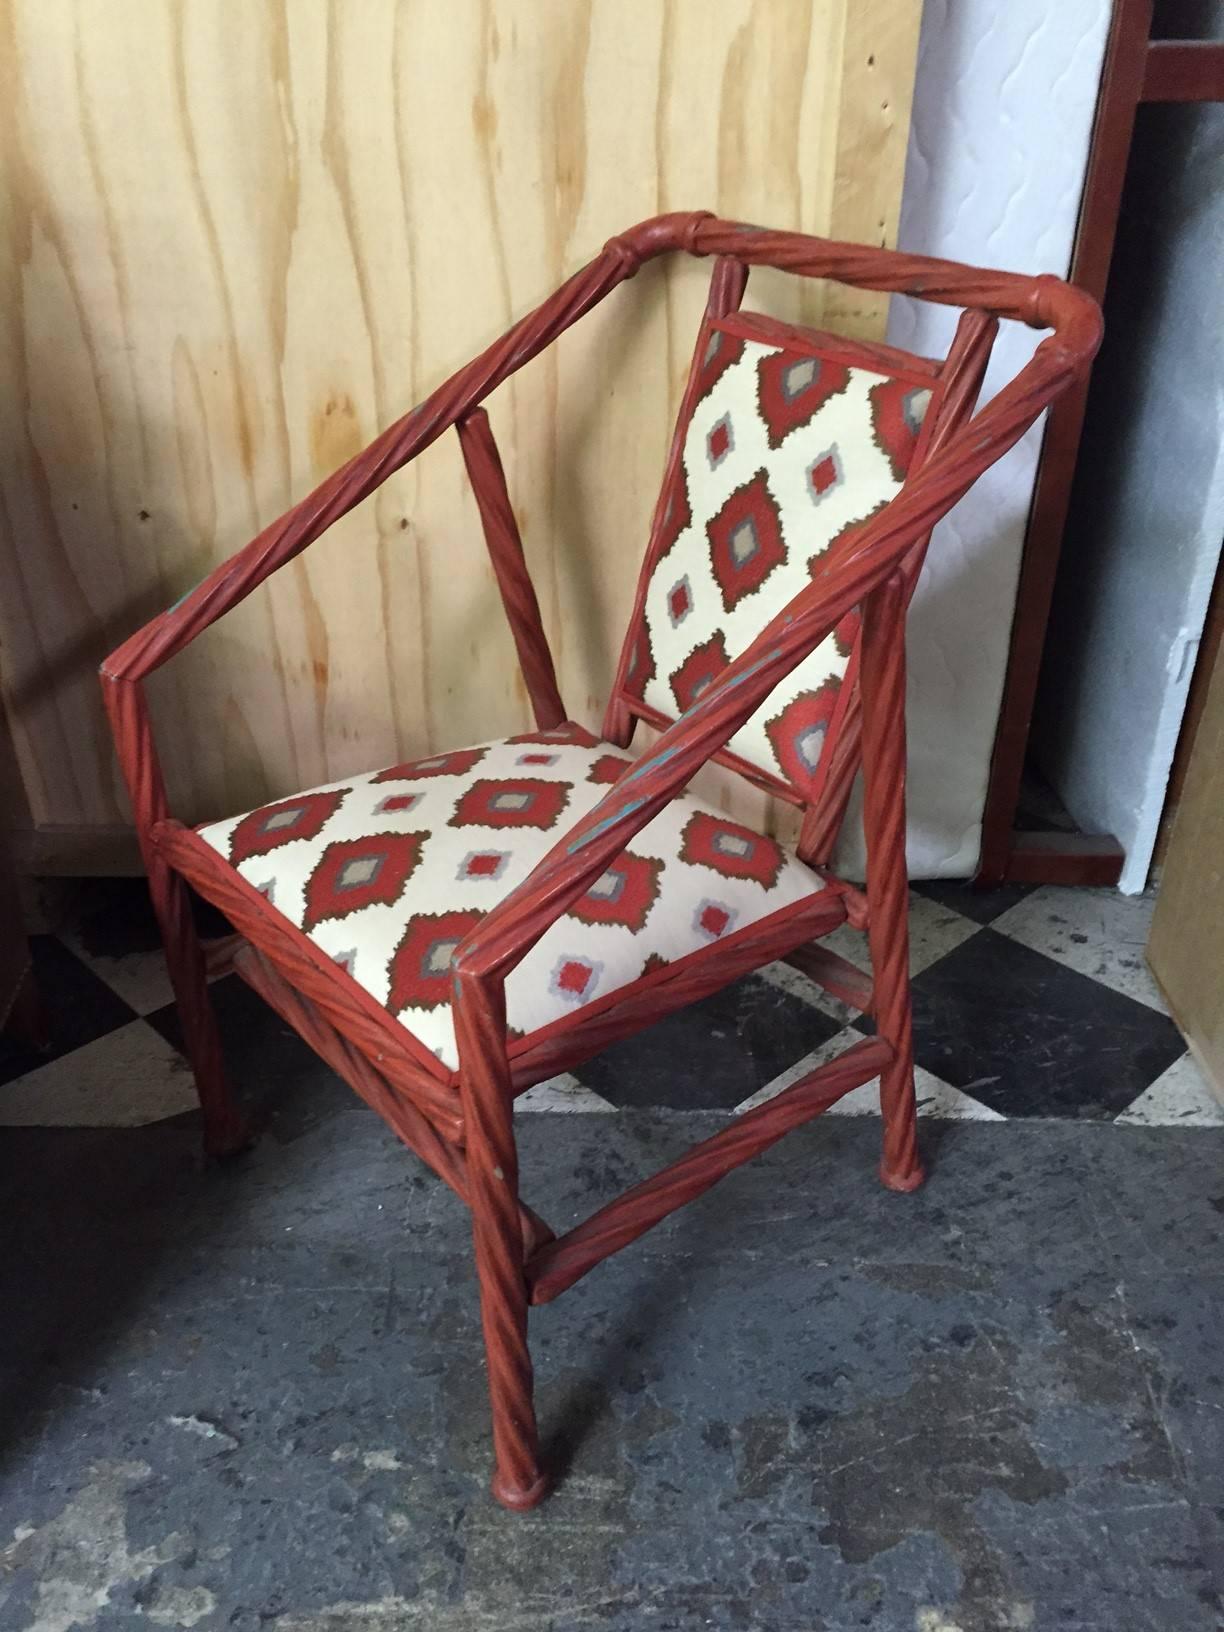 Vintage chair, reupholstered in Martin Bullard's Lola diamond fabric
red finish.
Measures: 23